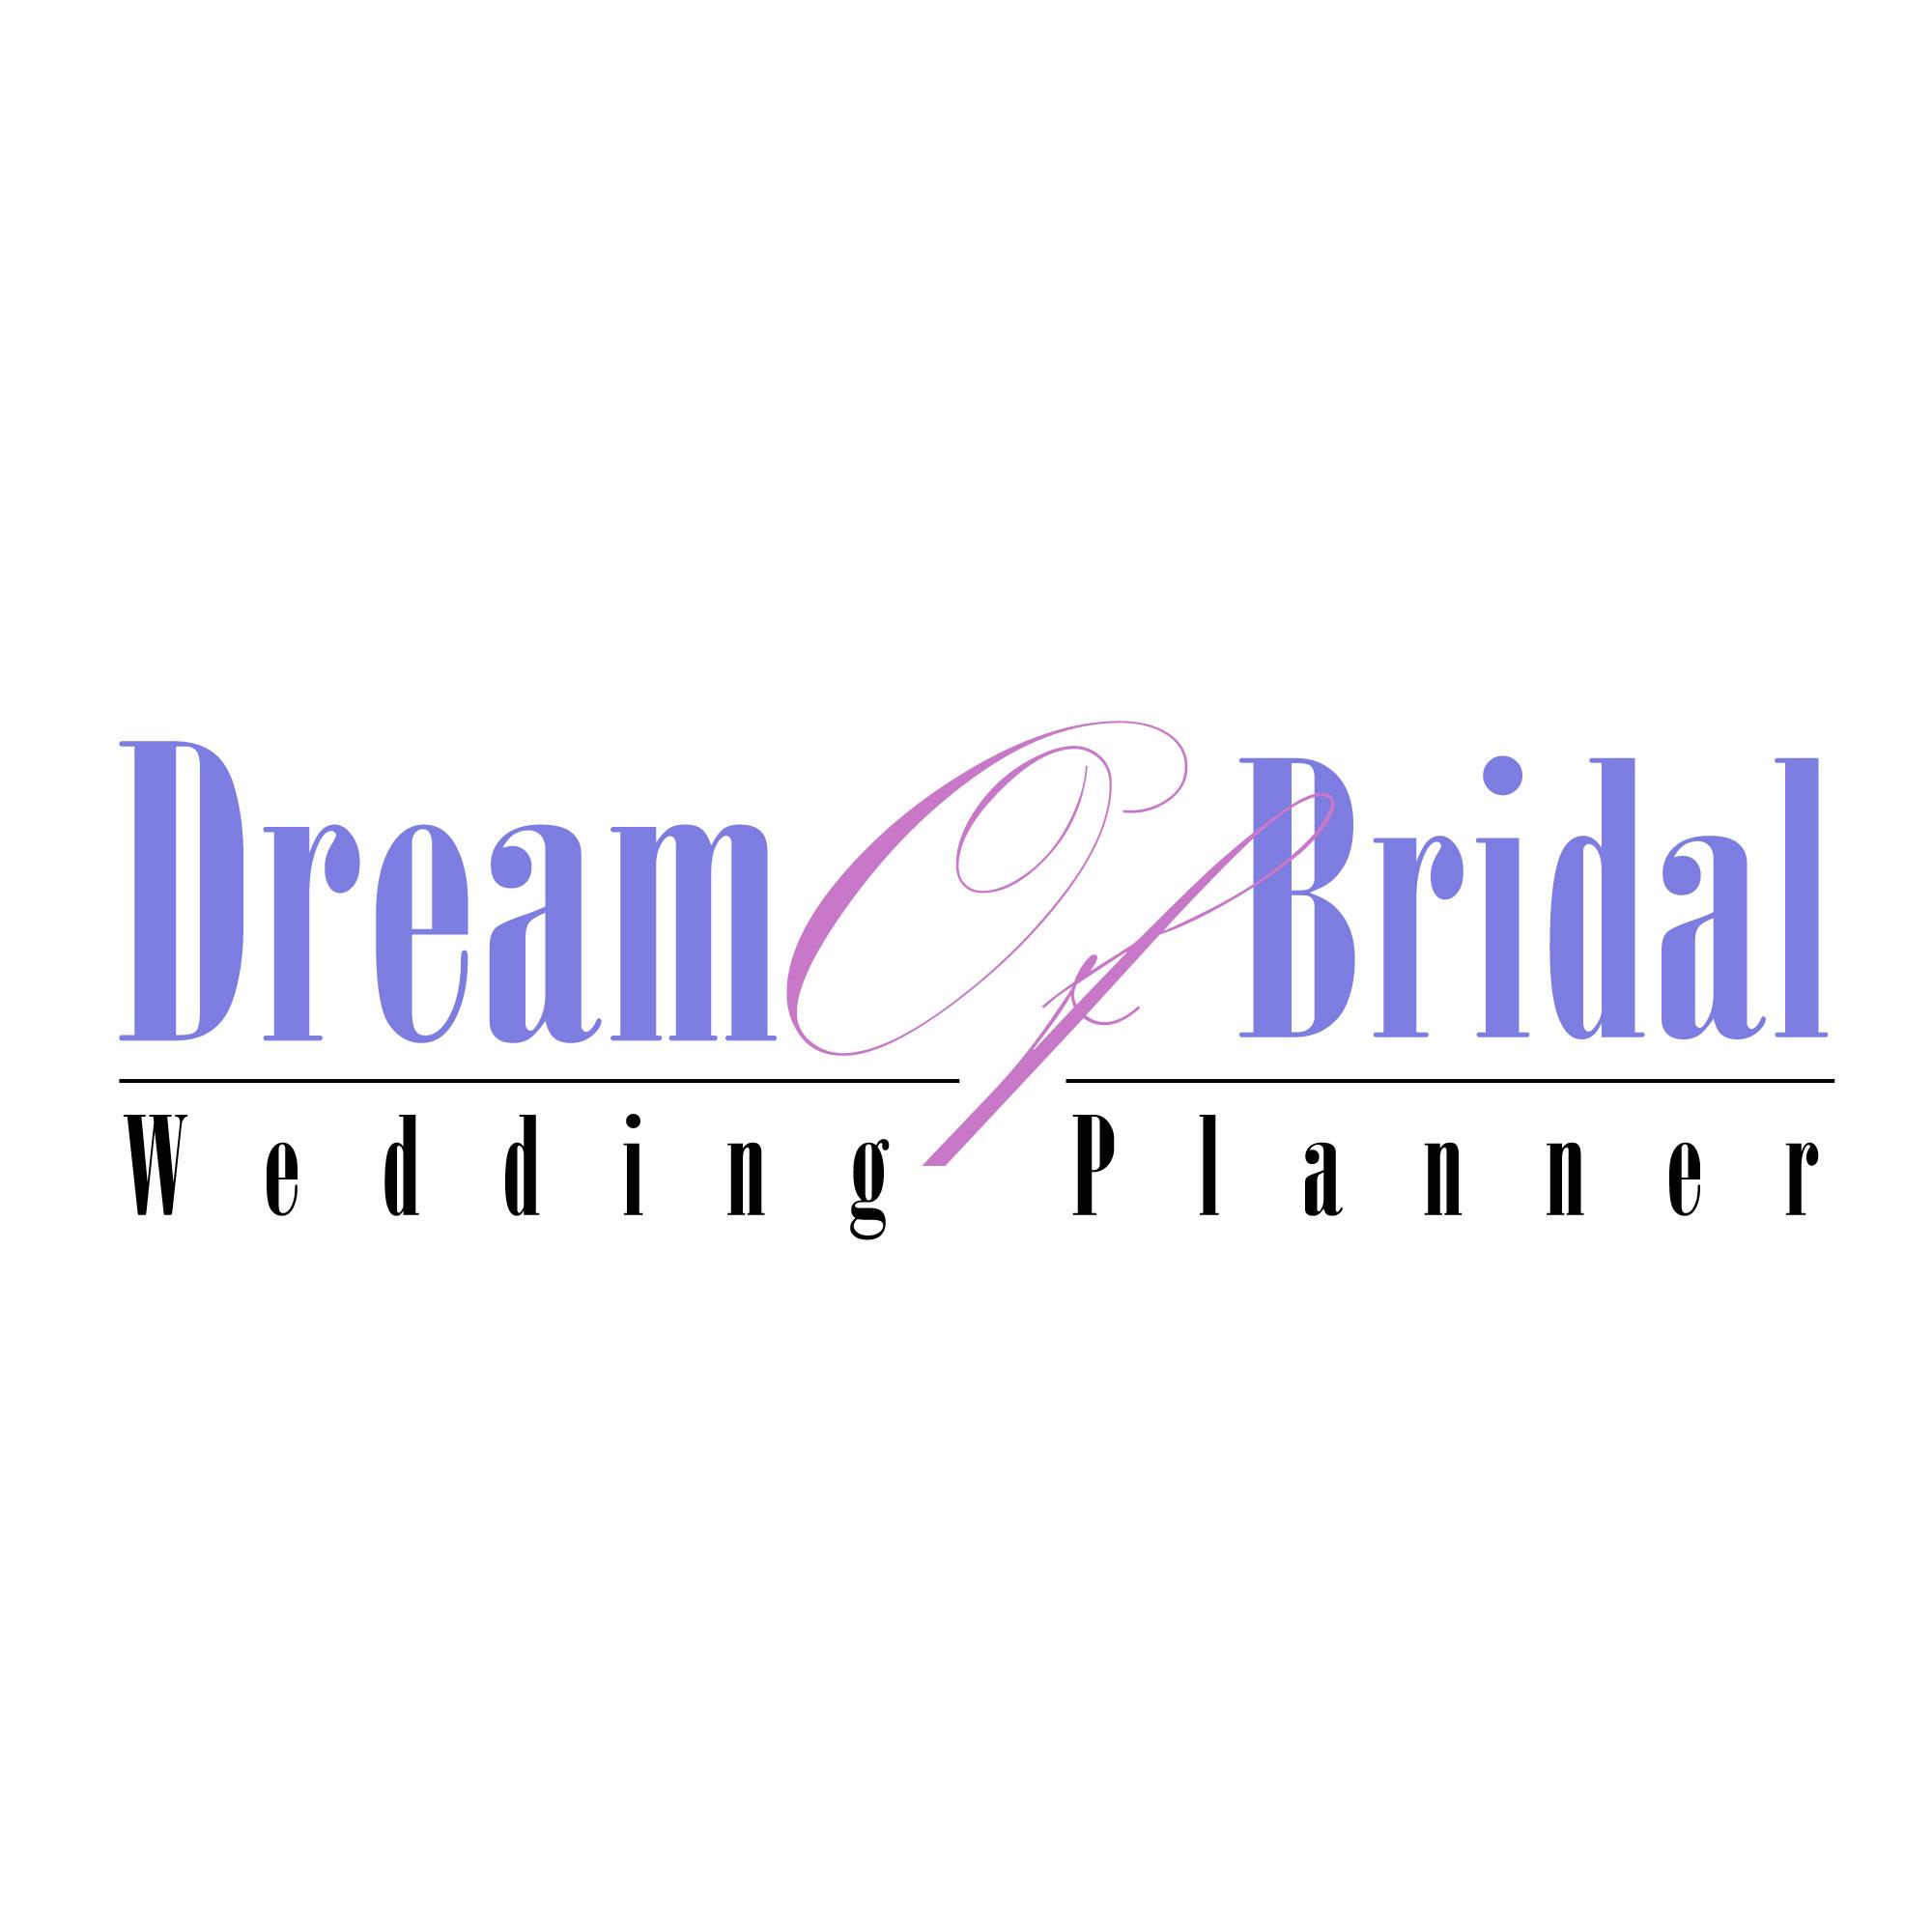 中式婚禮統籌推介: Dream of Bridal - Wedding Planner